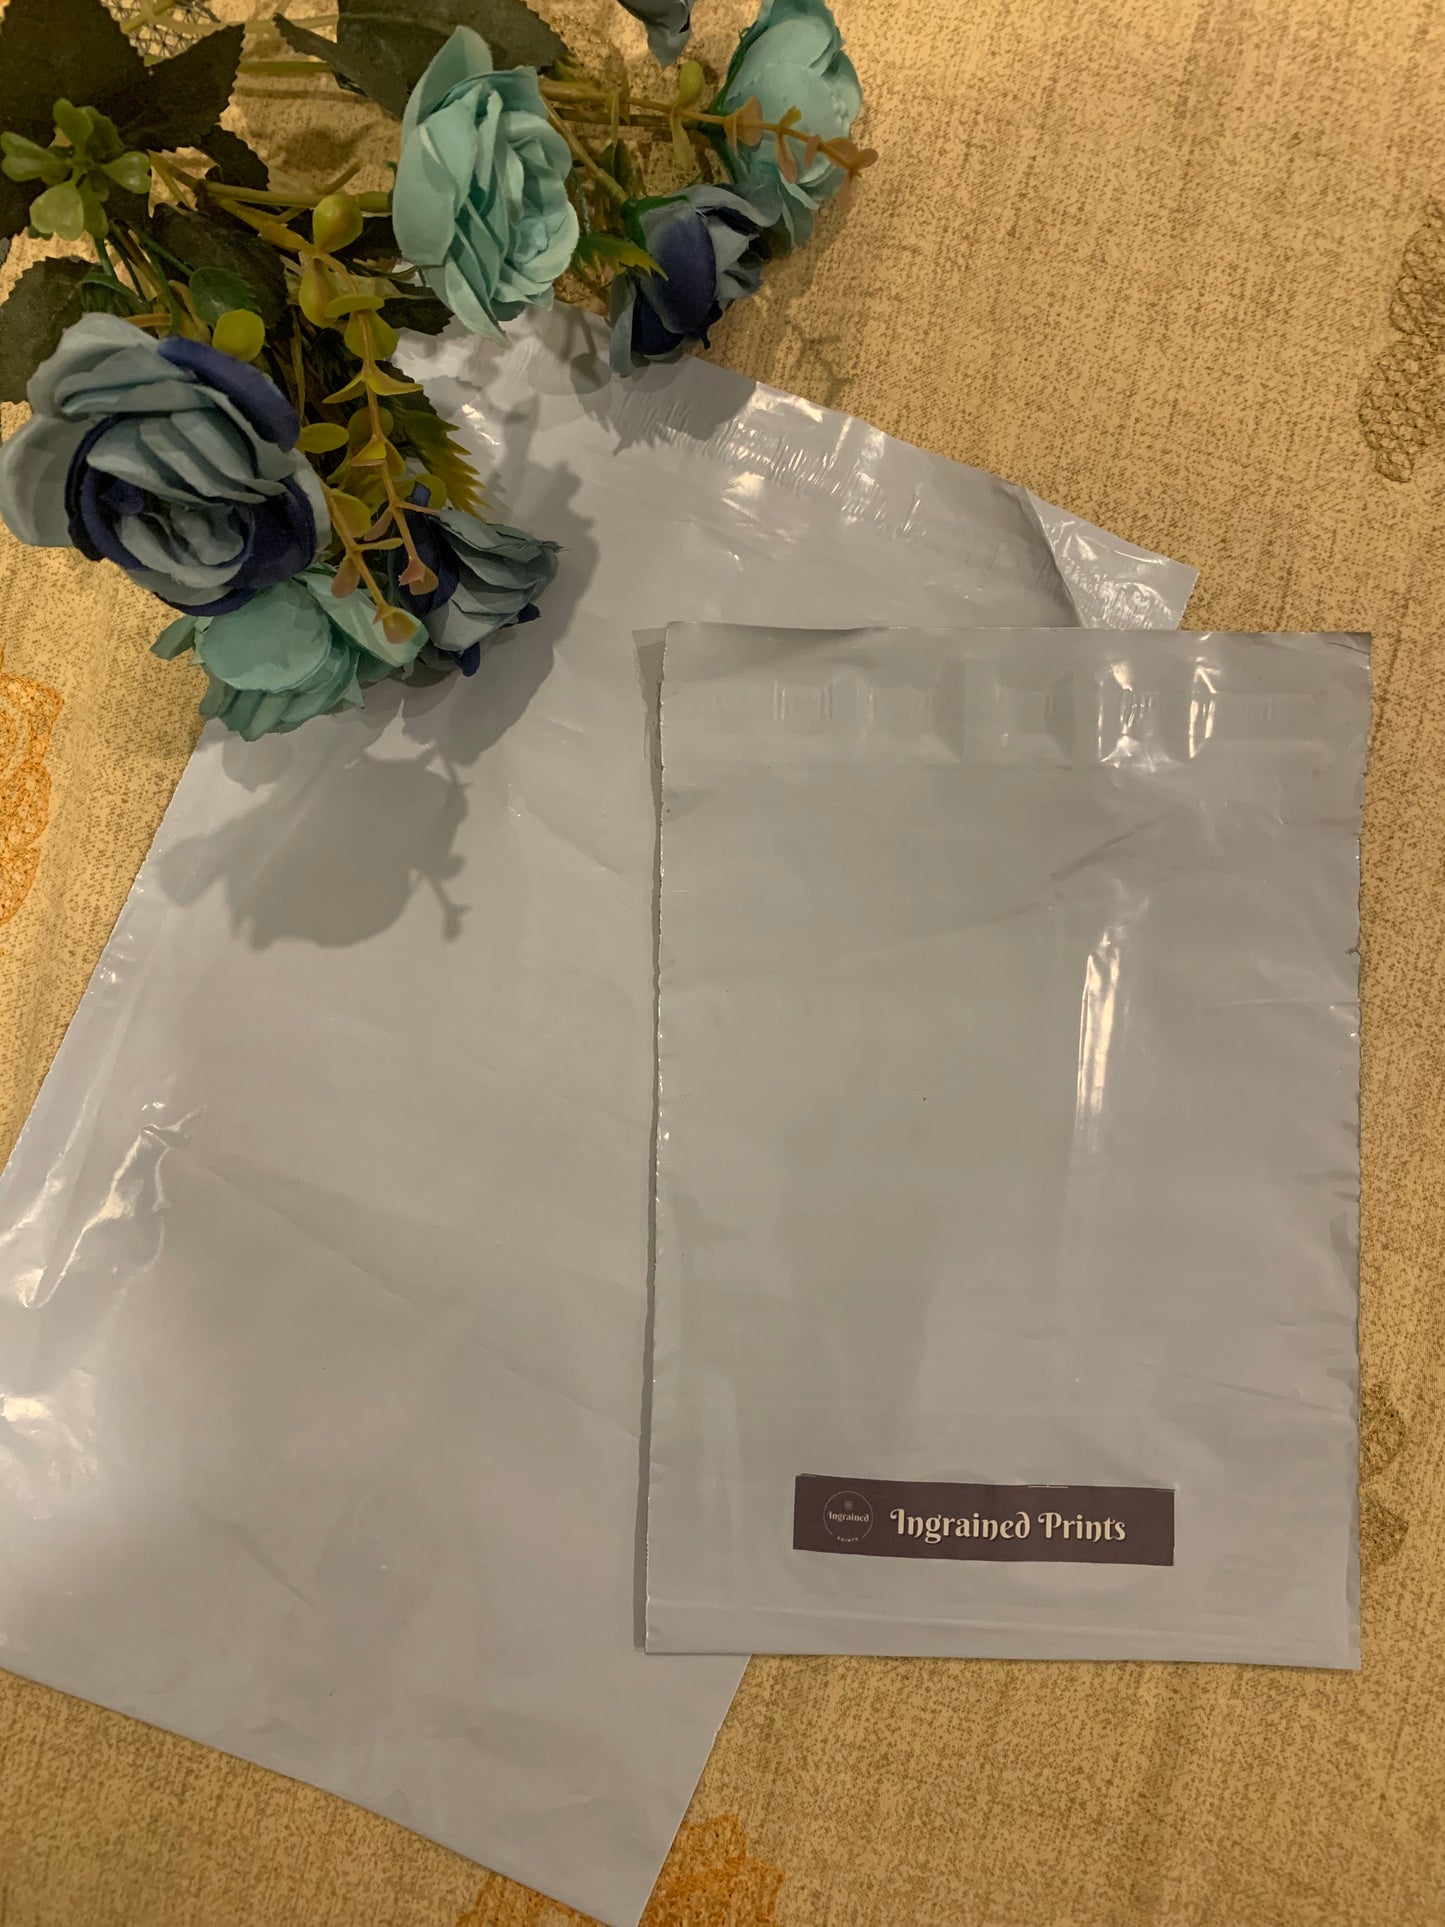 Plain Courier Bags - Ingrained Prints